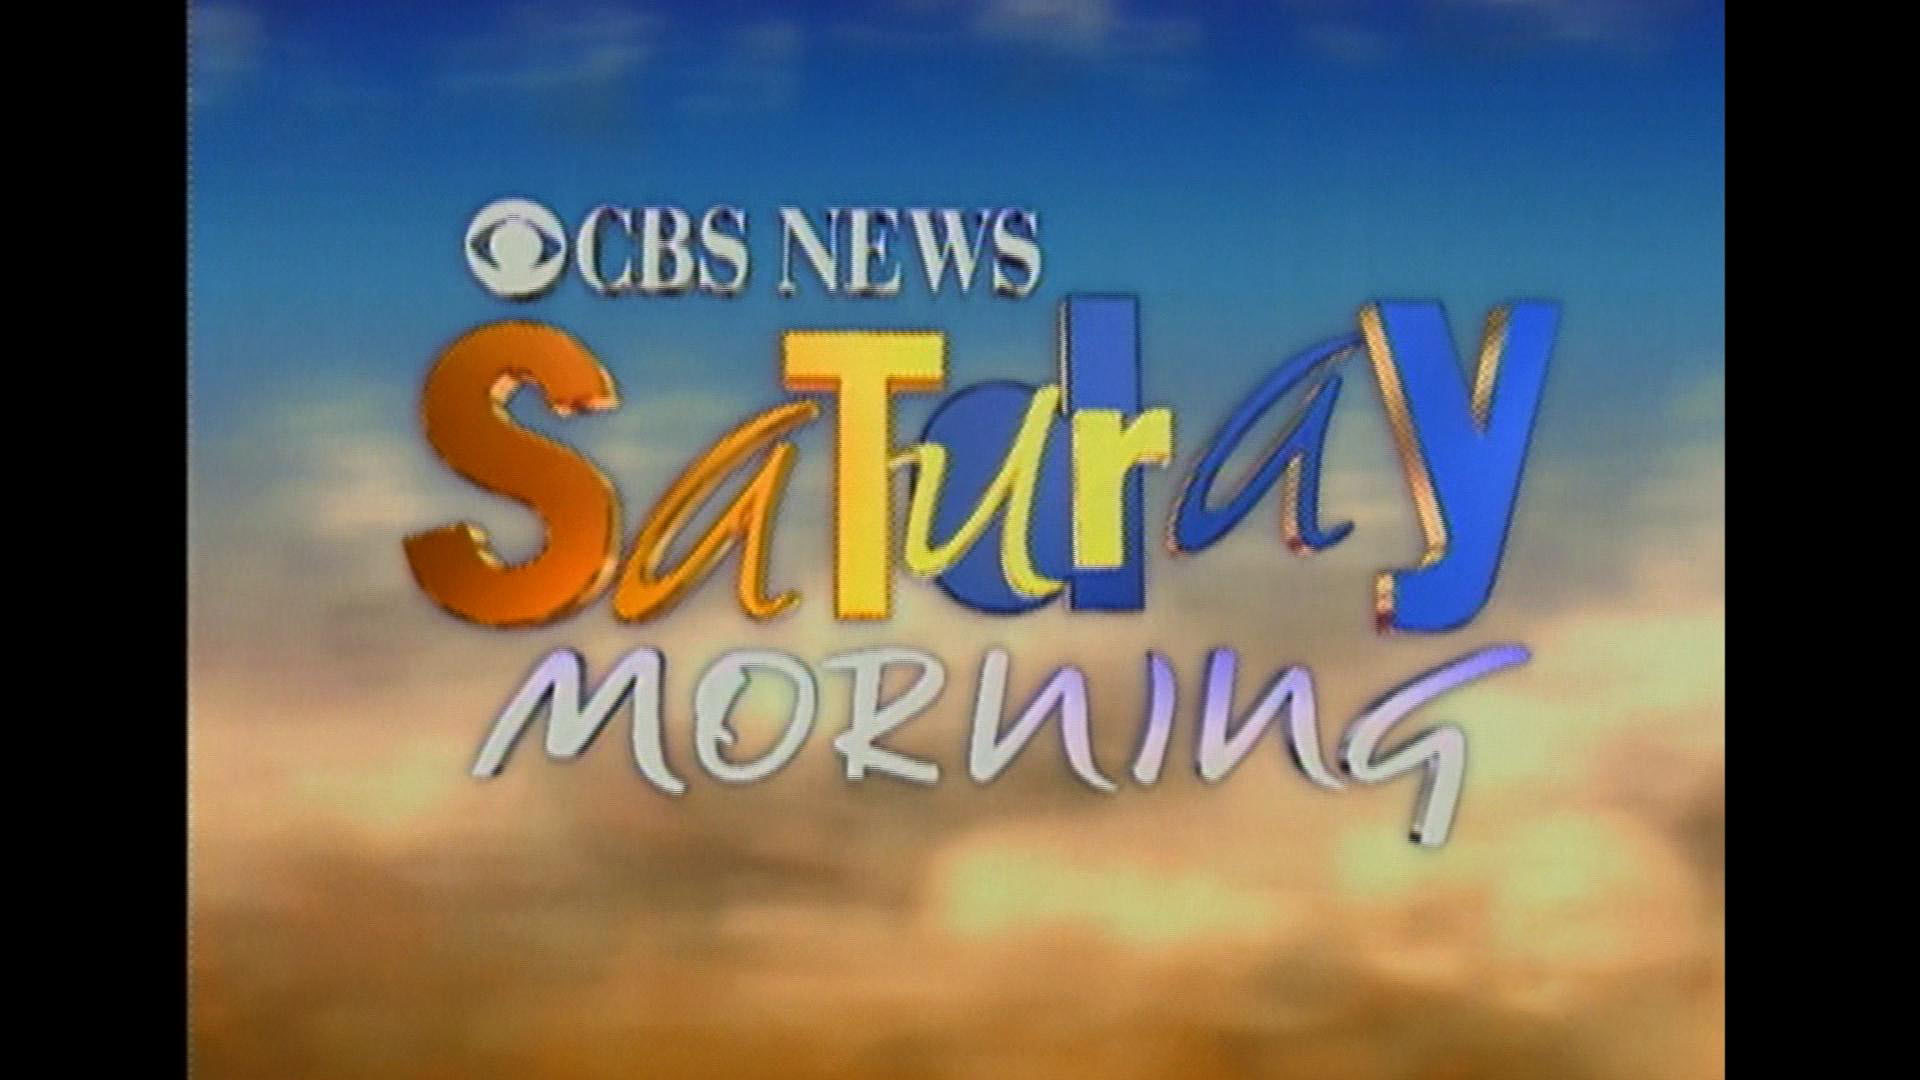 Watch CBS Saturday Morning The history of "CBS Saturday Morning